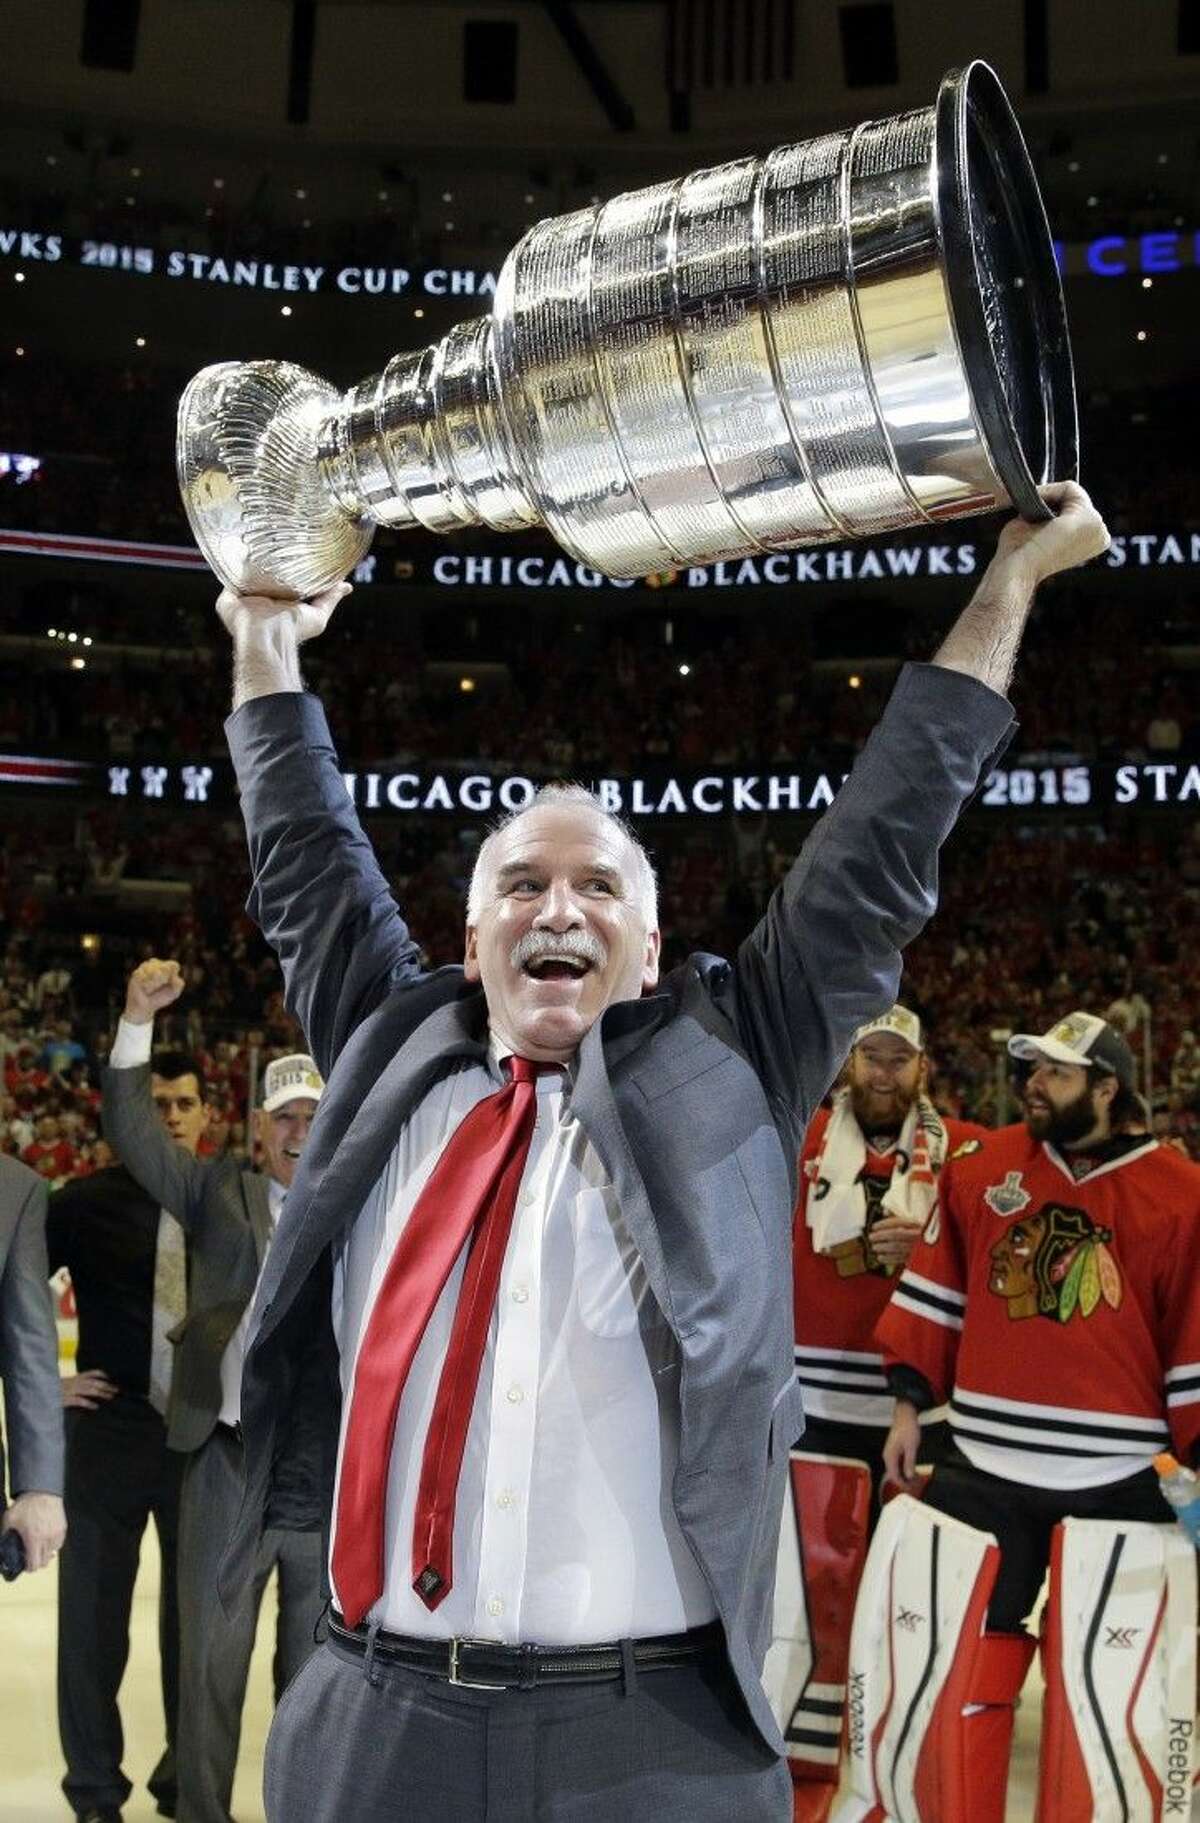 Chicago celebrates Blackhawks' Stanley Cup win - The San Diego Union-Tribune